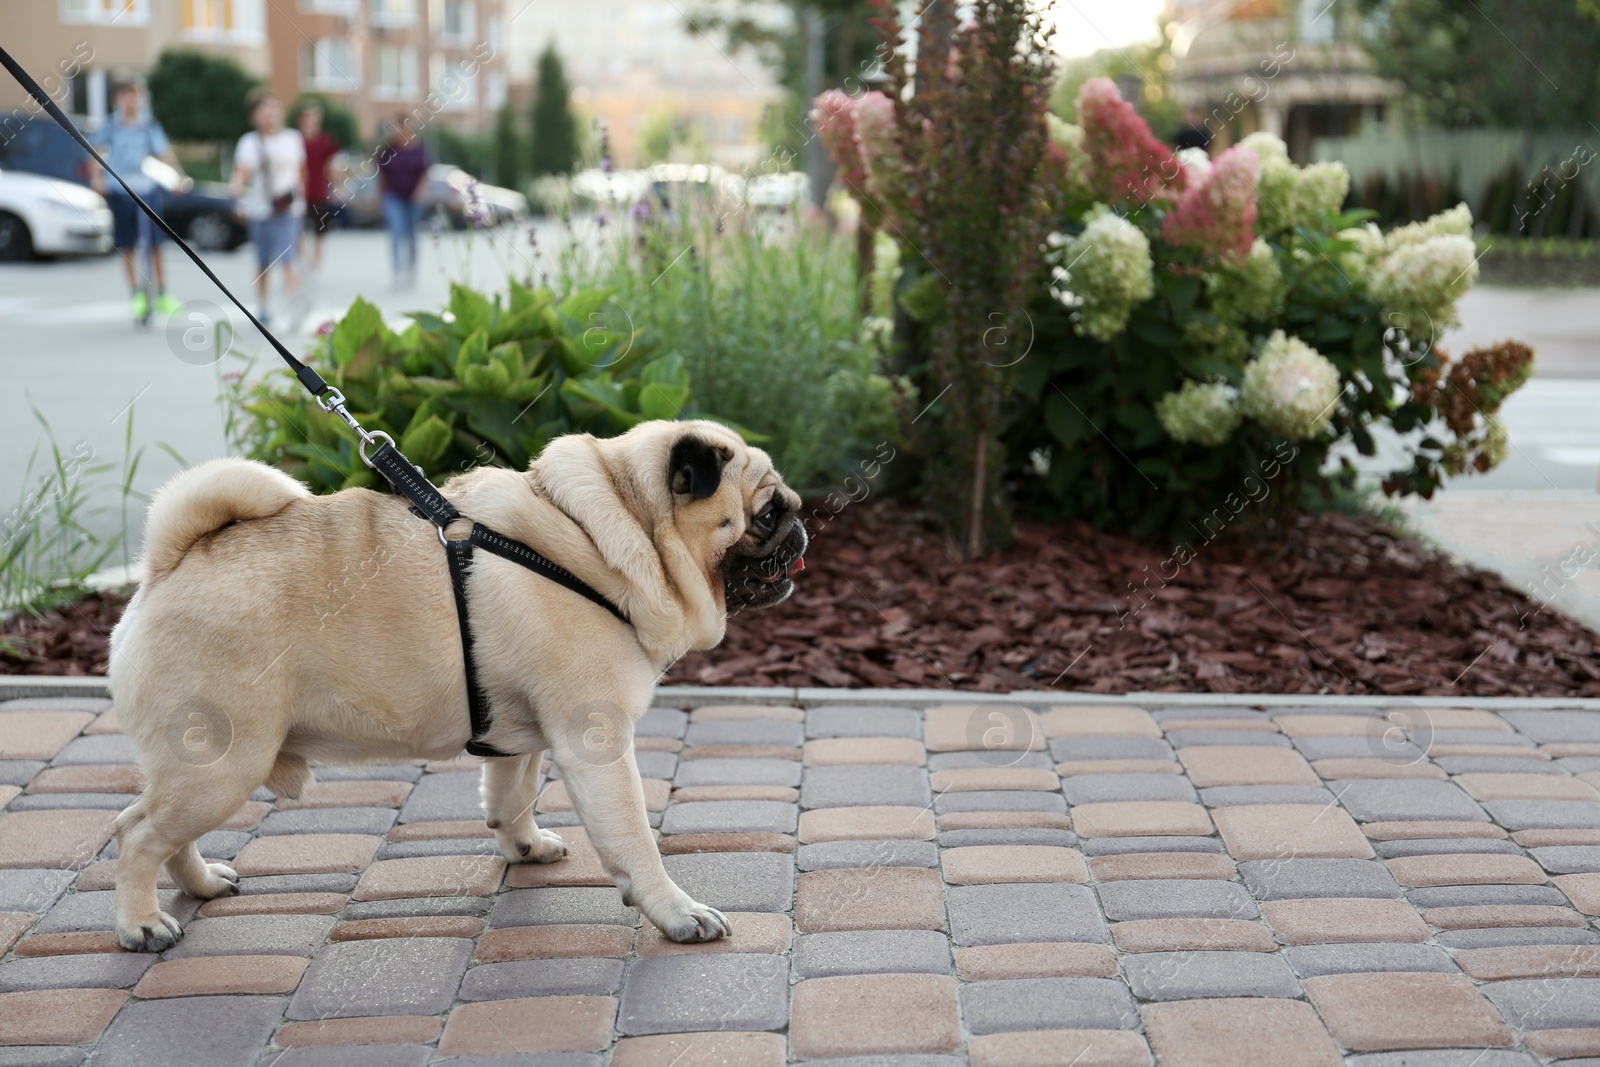 Photo of Cute pug with leash on walkway outdoors. Dog walking